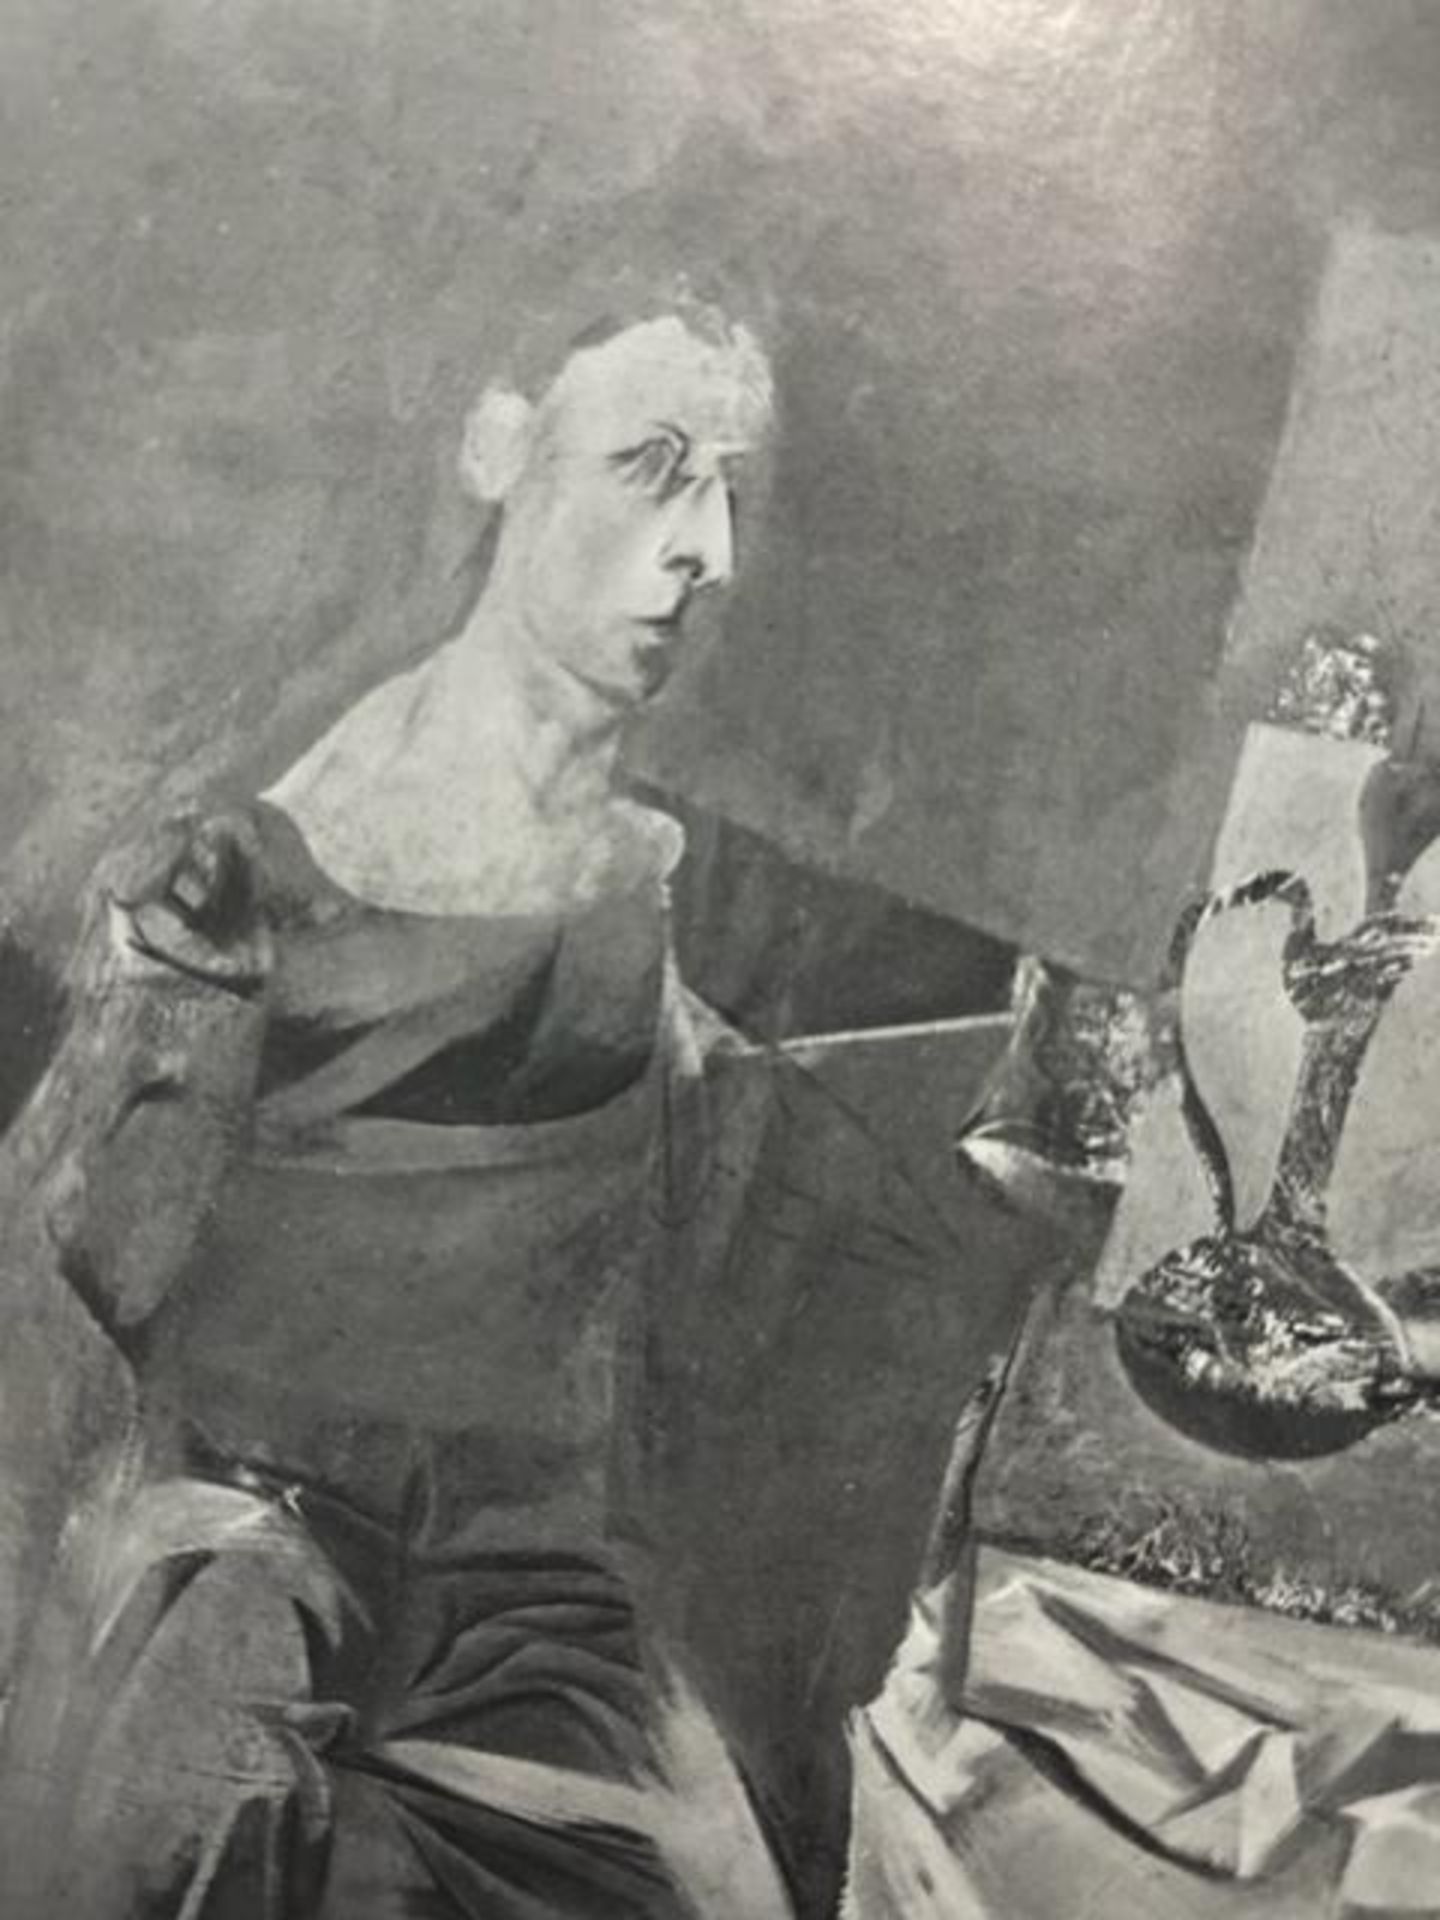 Willem de Kooning "Glazier" Print. - Image 6 of 6